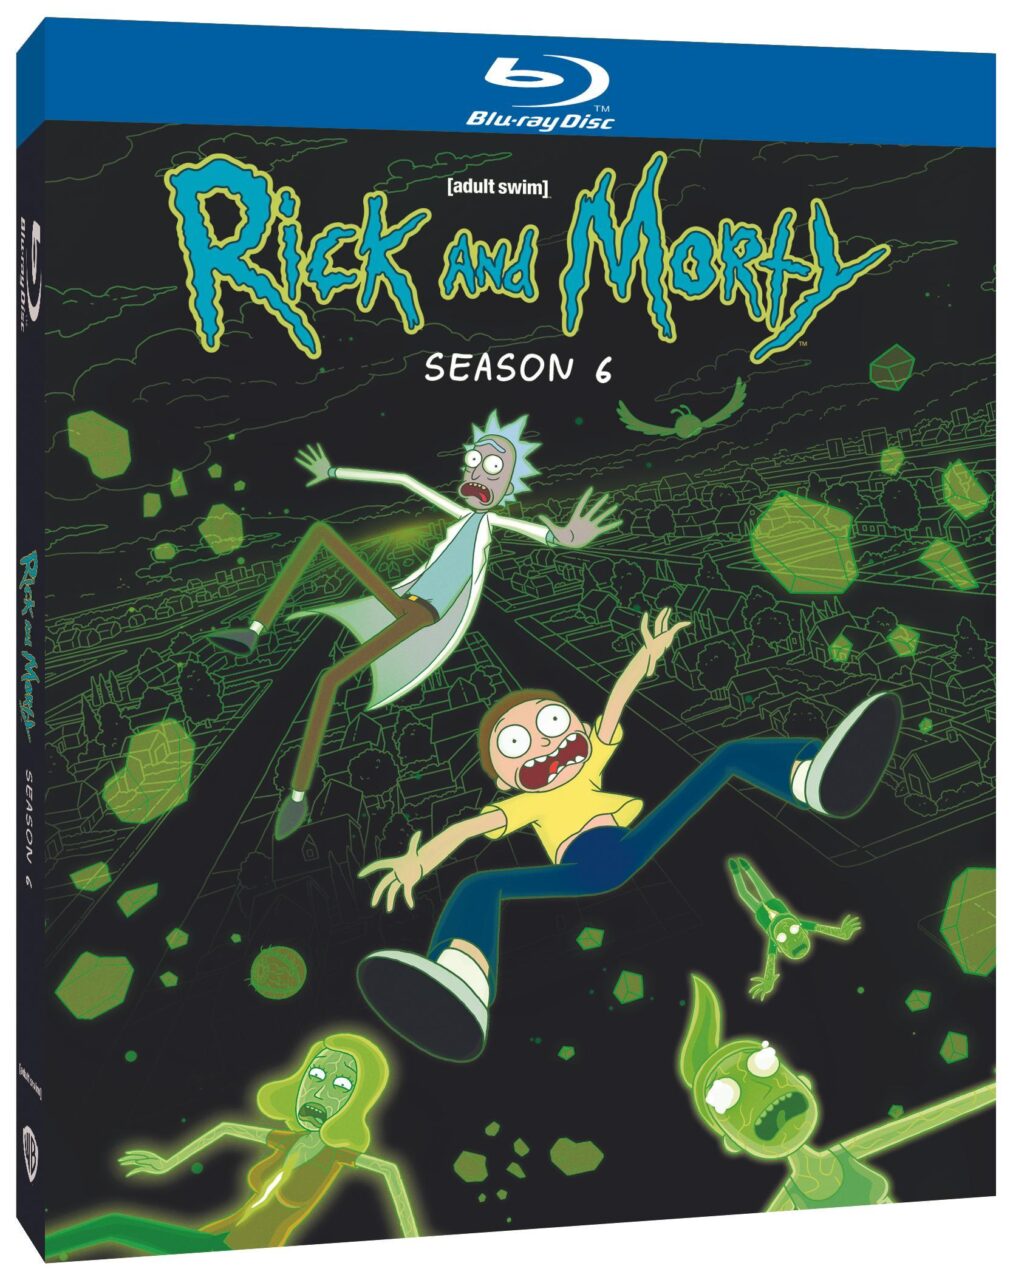 Rick And Morty: Season 6 Blu-Ray cover (Warner Bros. Home Entertainment)